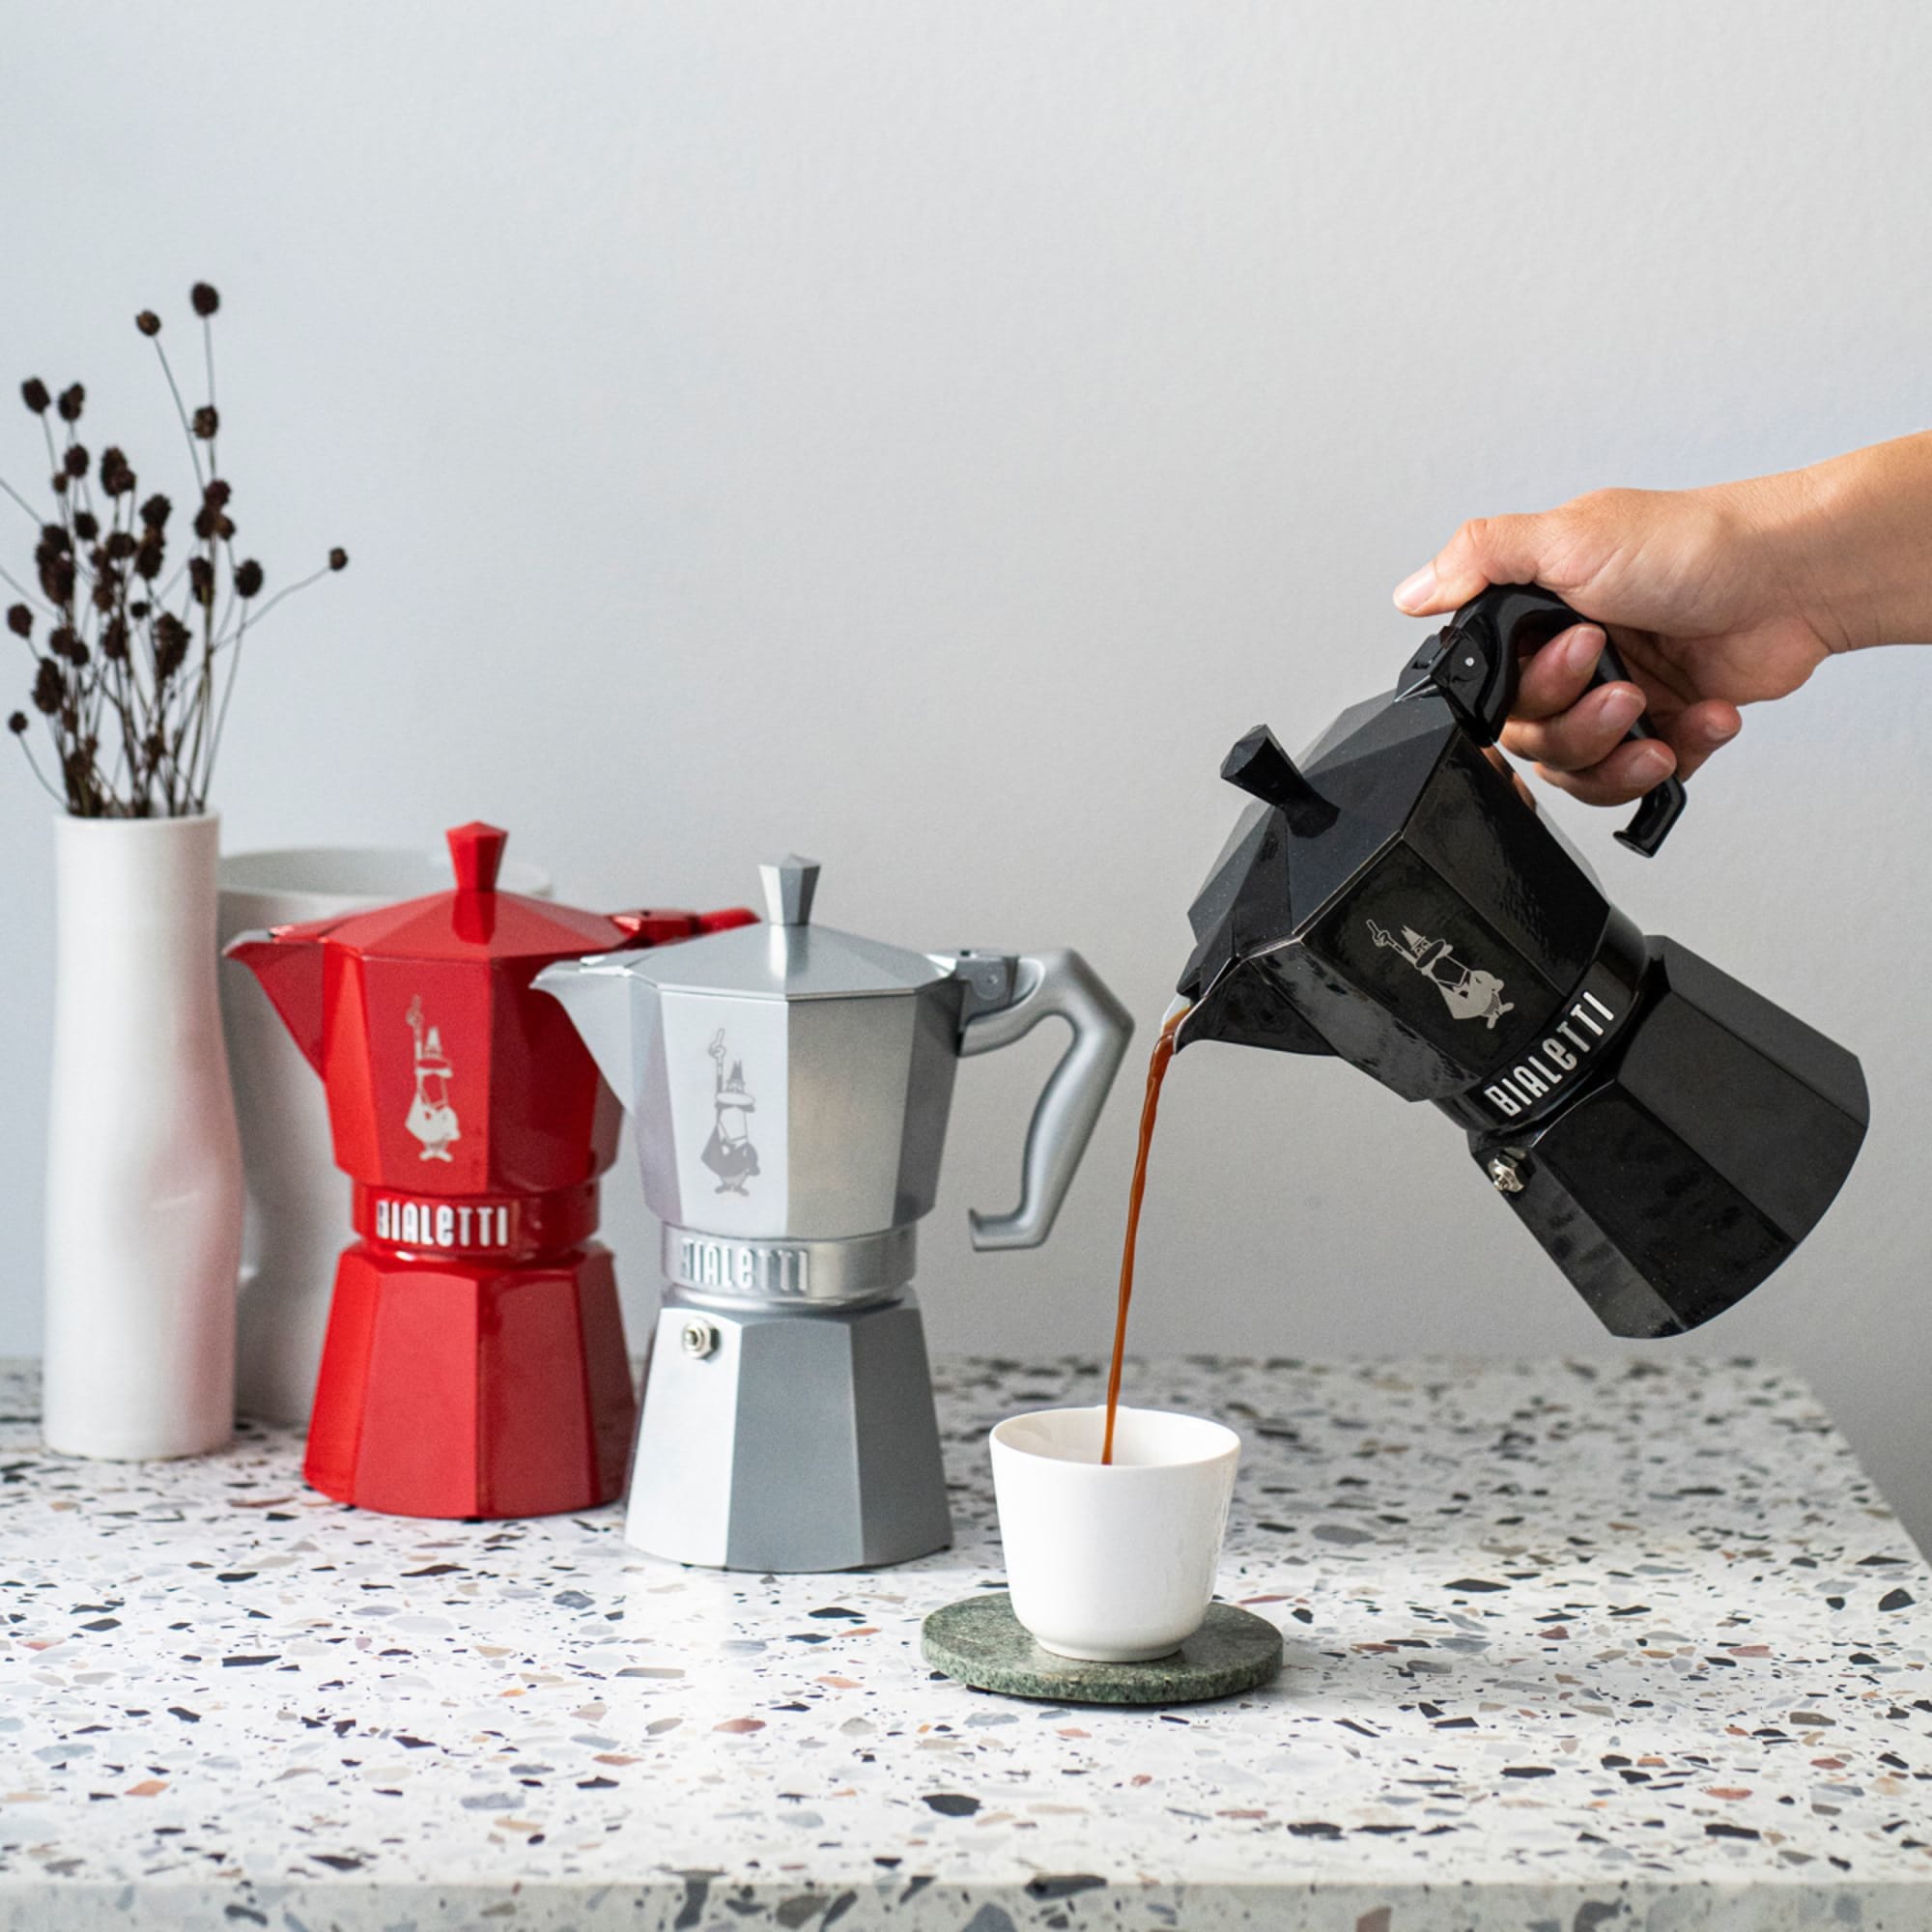 Cuisinox Capri Stainless Steel Espresso Coffee Maker Induction Moka Pot, 4-Cup